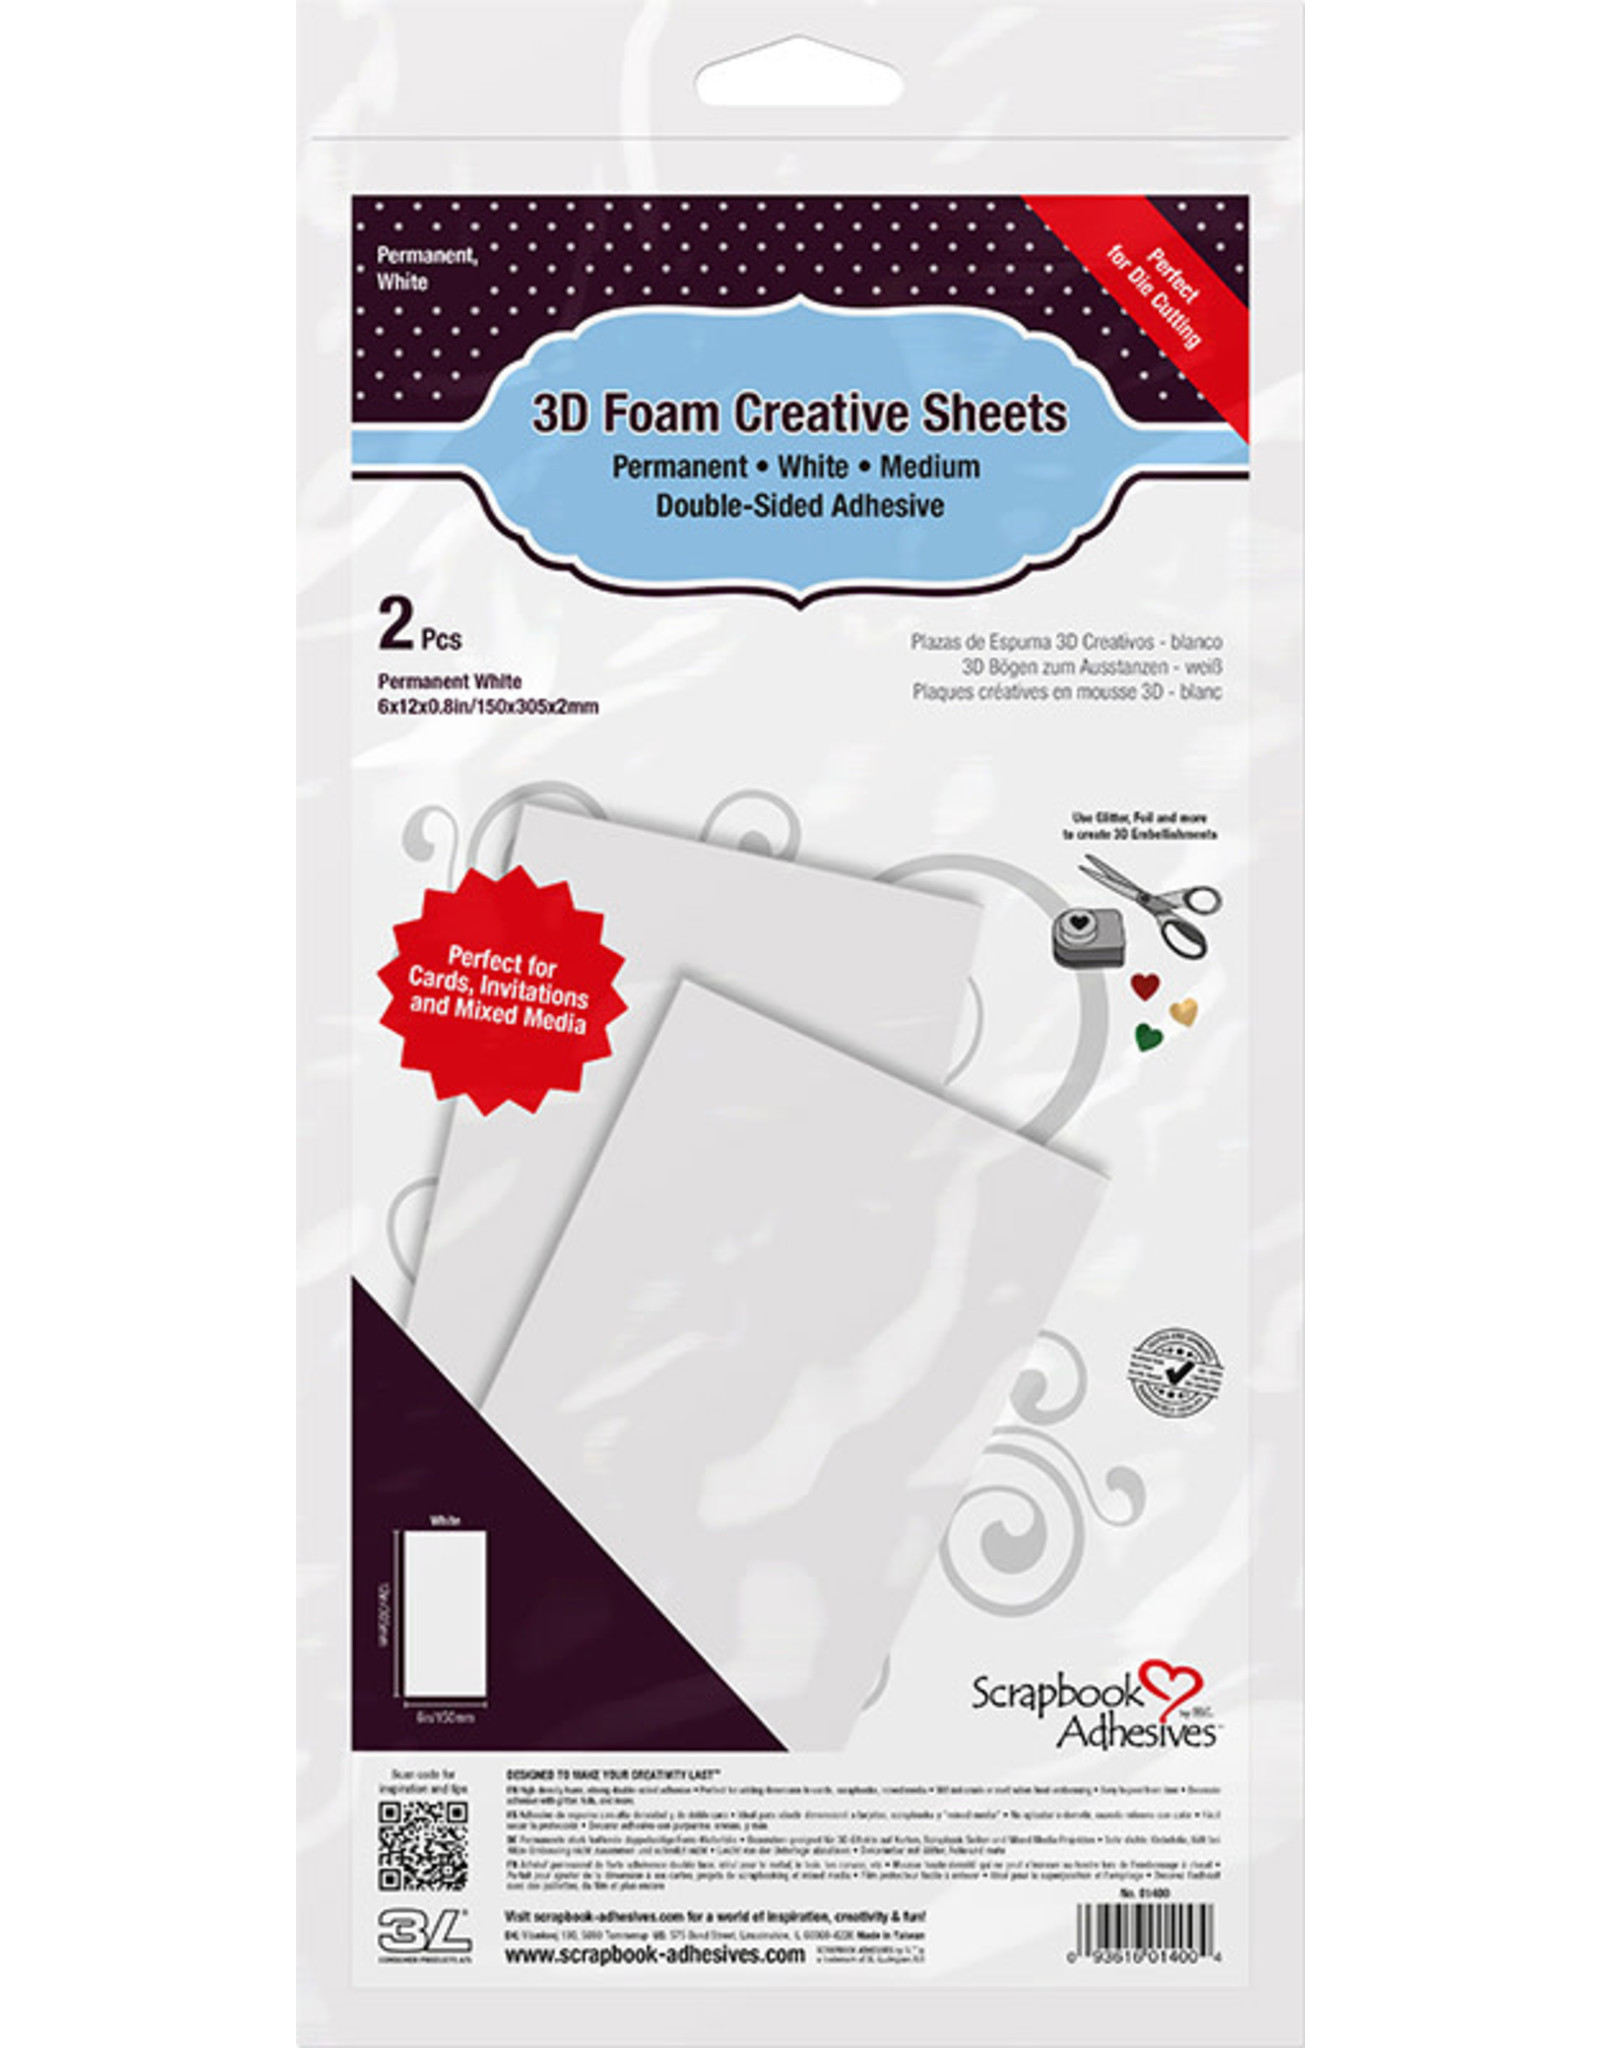 Scrapbook Adhesives 3D Foam Creative Sheets - large white